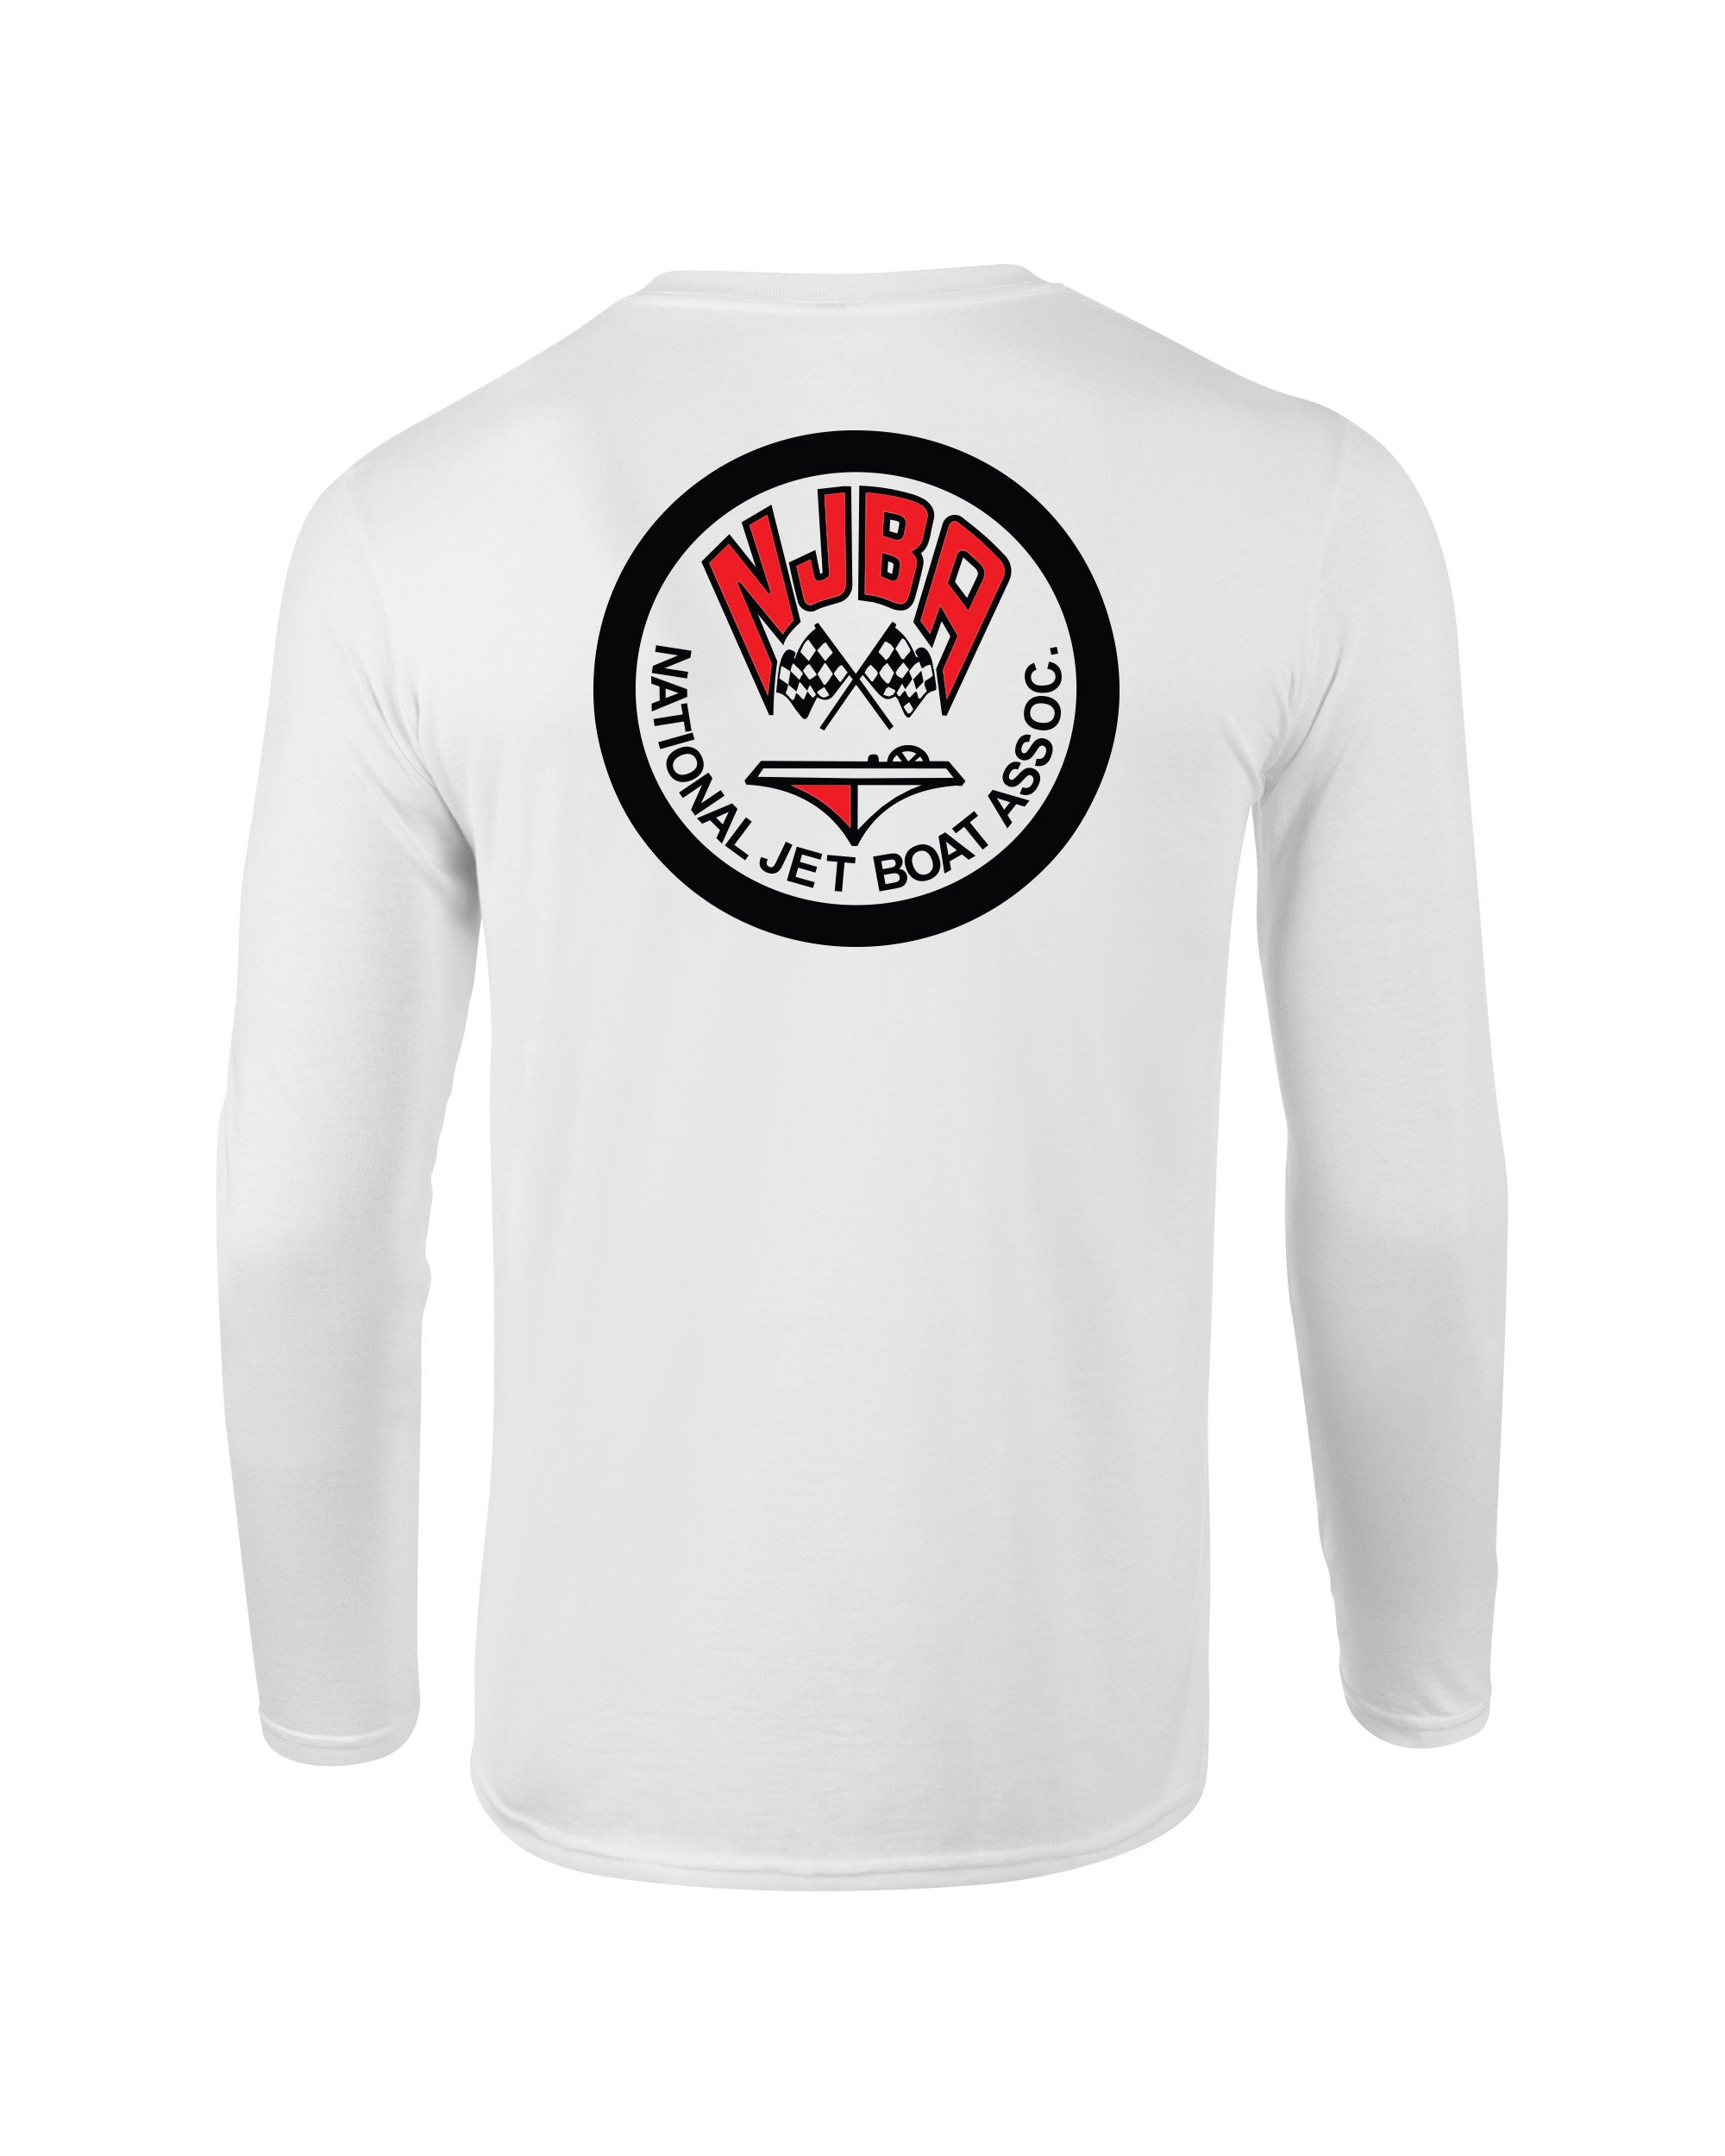 Official NJBA White Long Sleeve Shirt